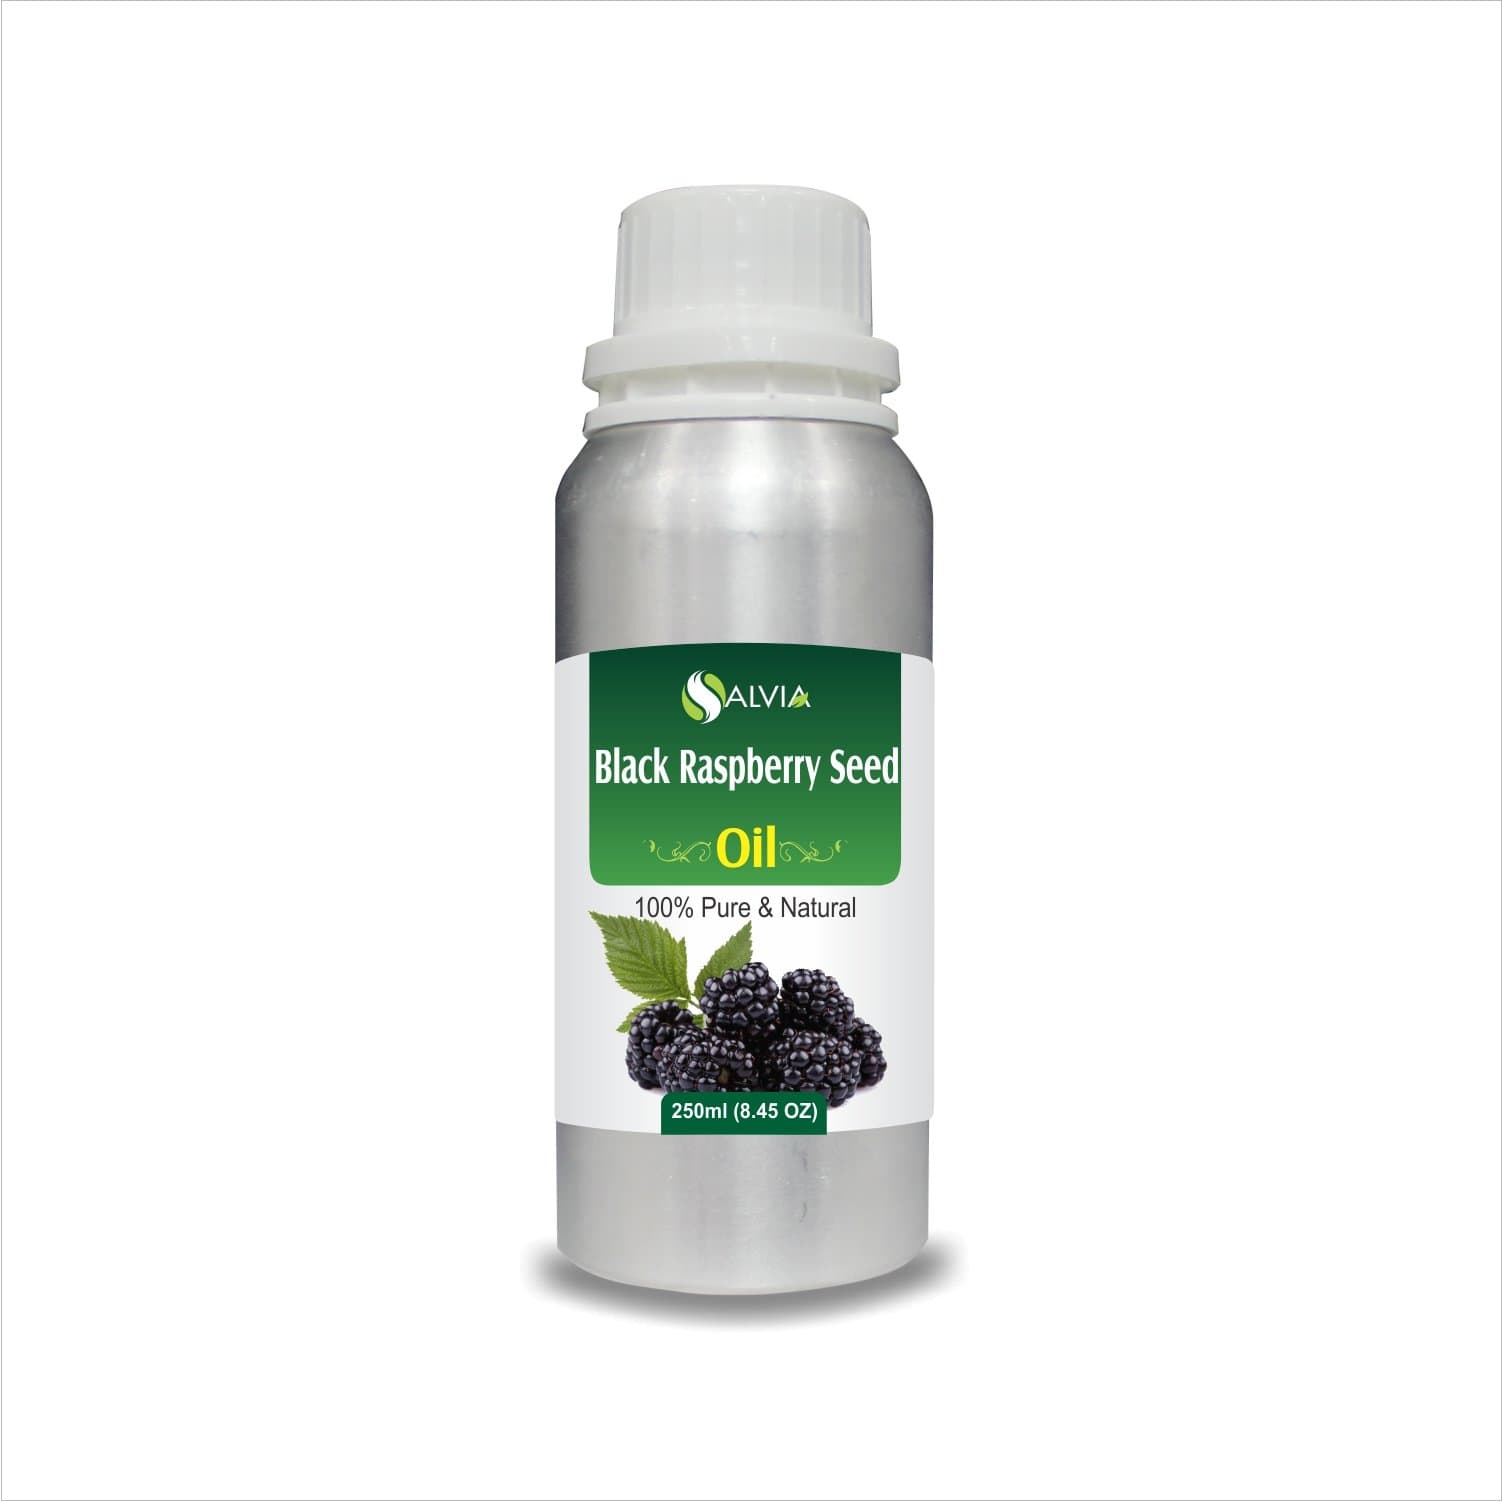 black raspberry seed oil benefits